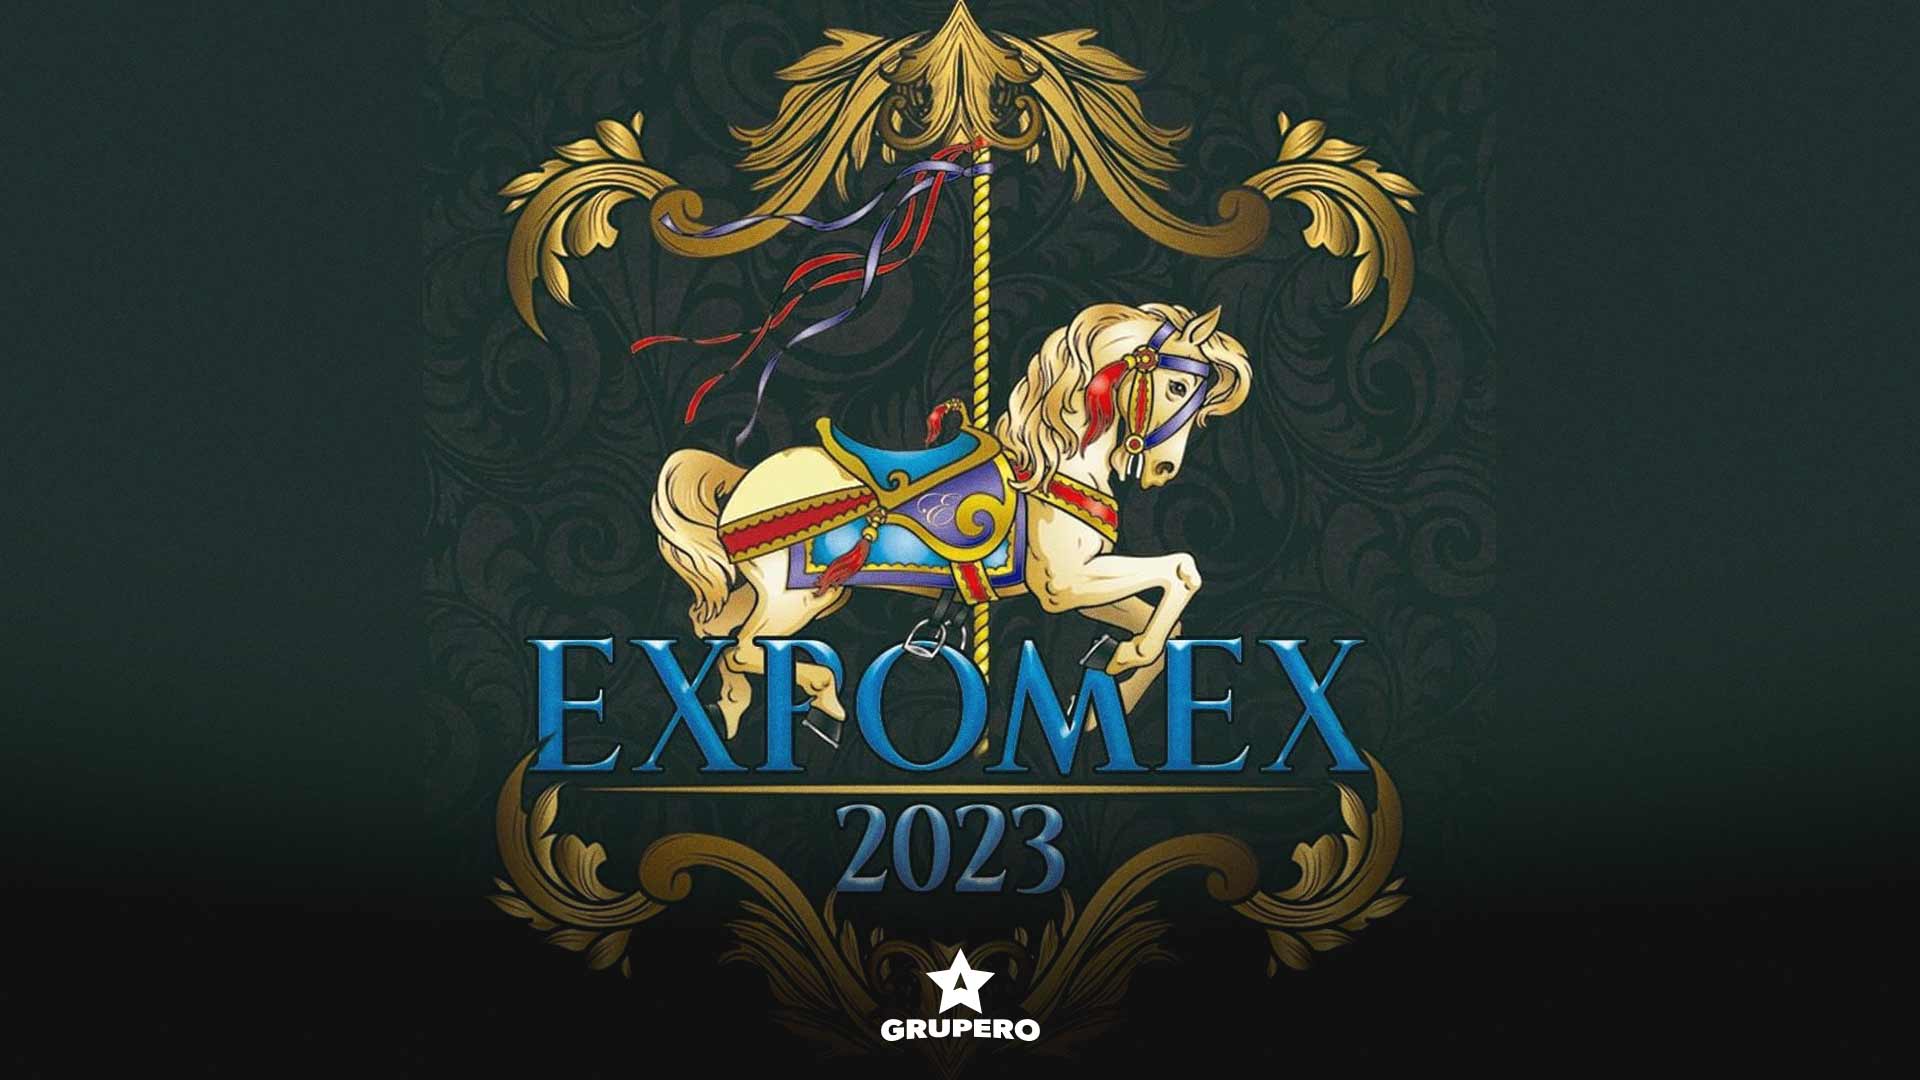 Expomex Nuevo Laredo 2023